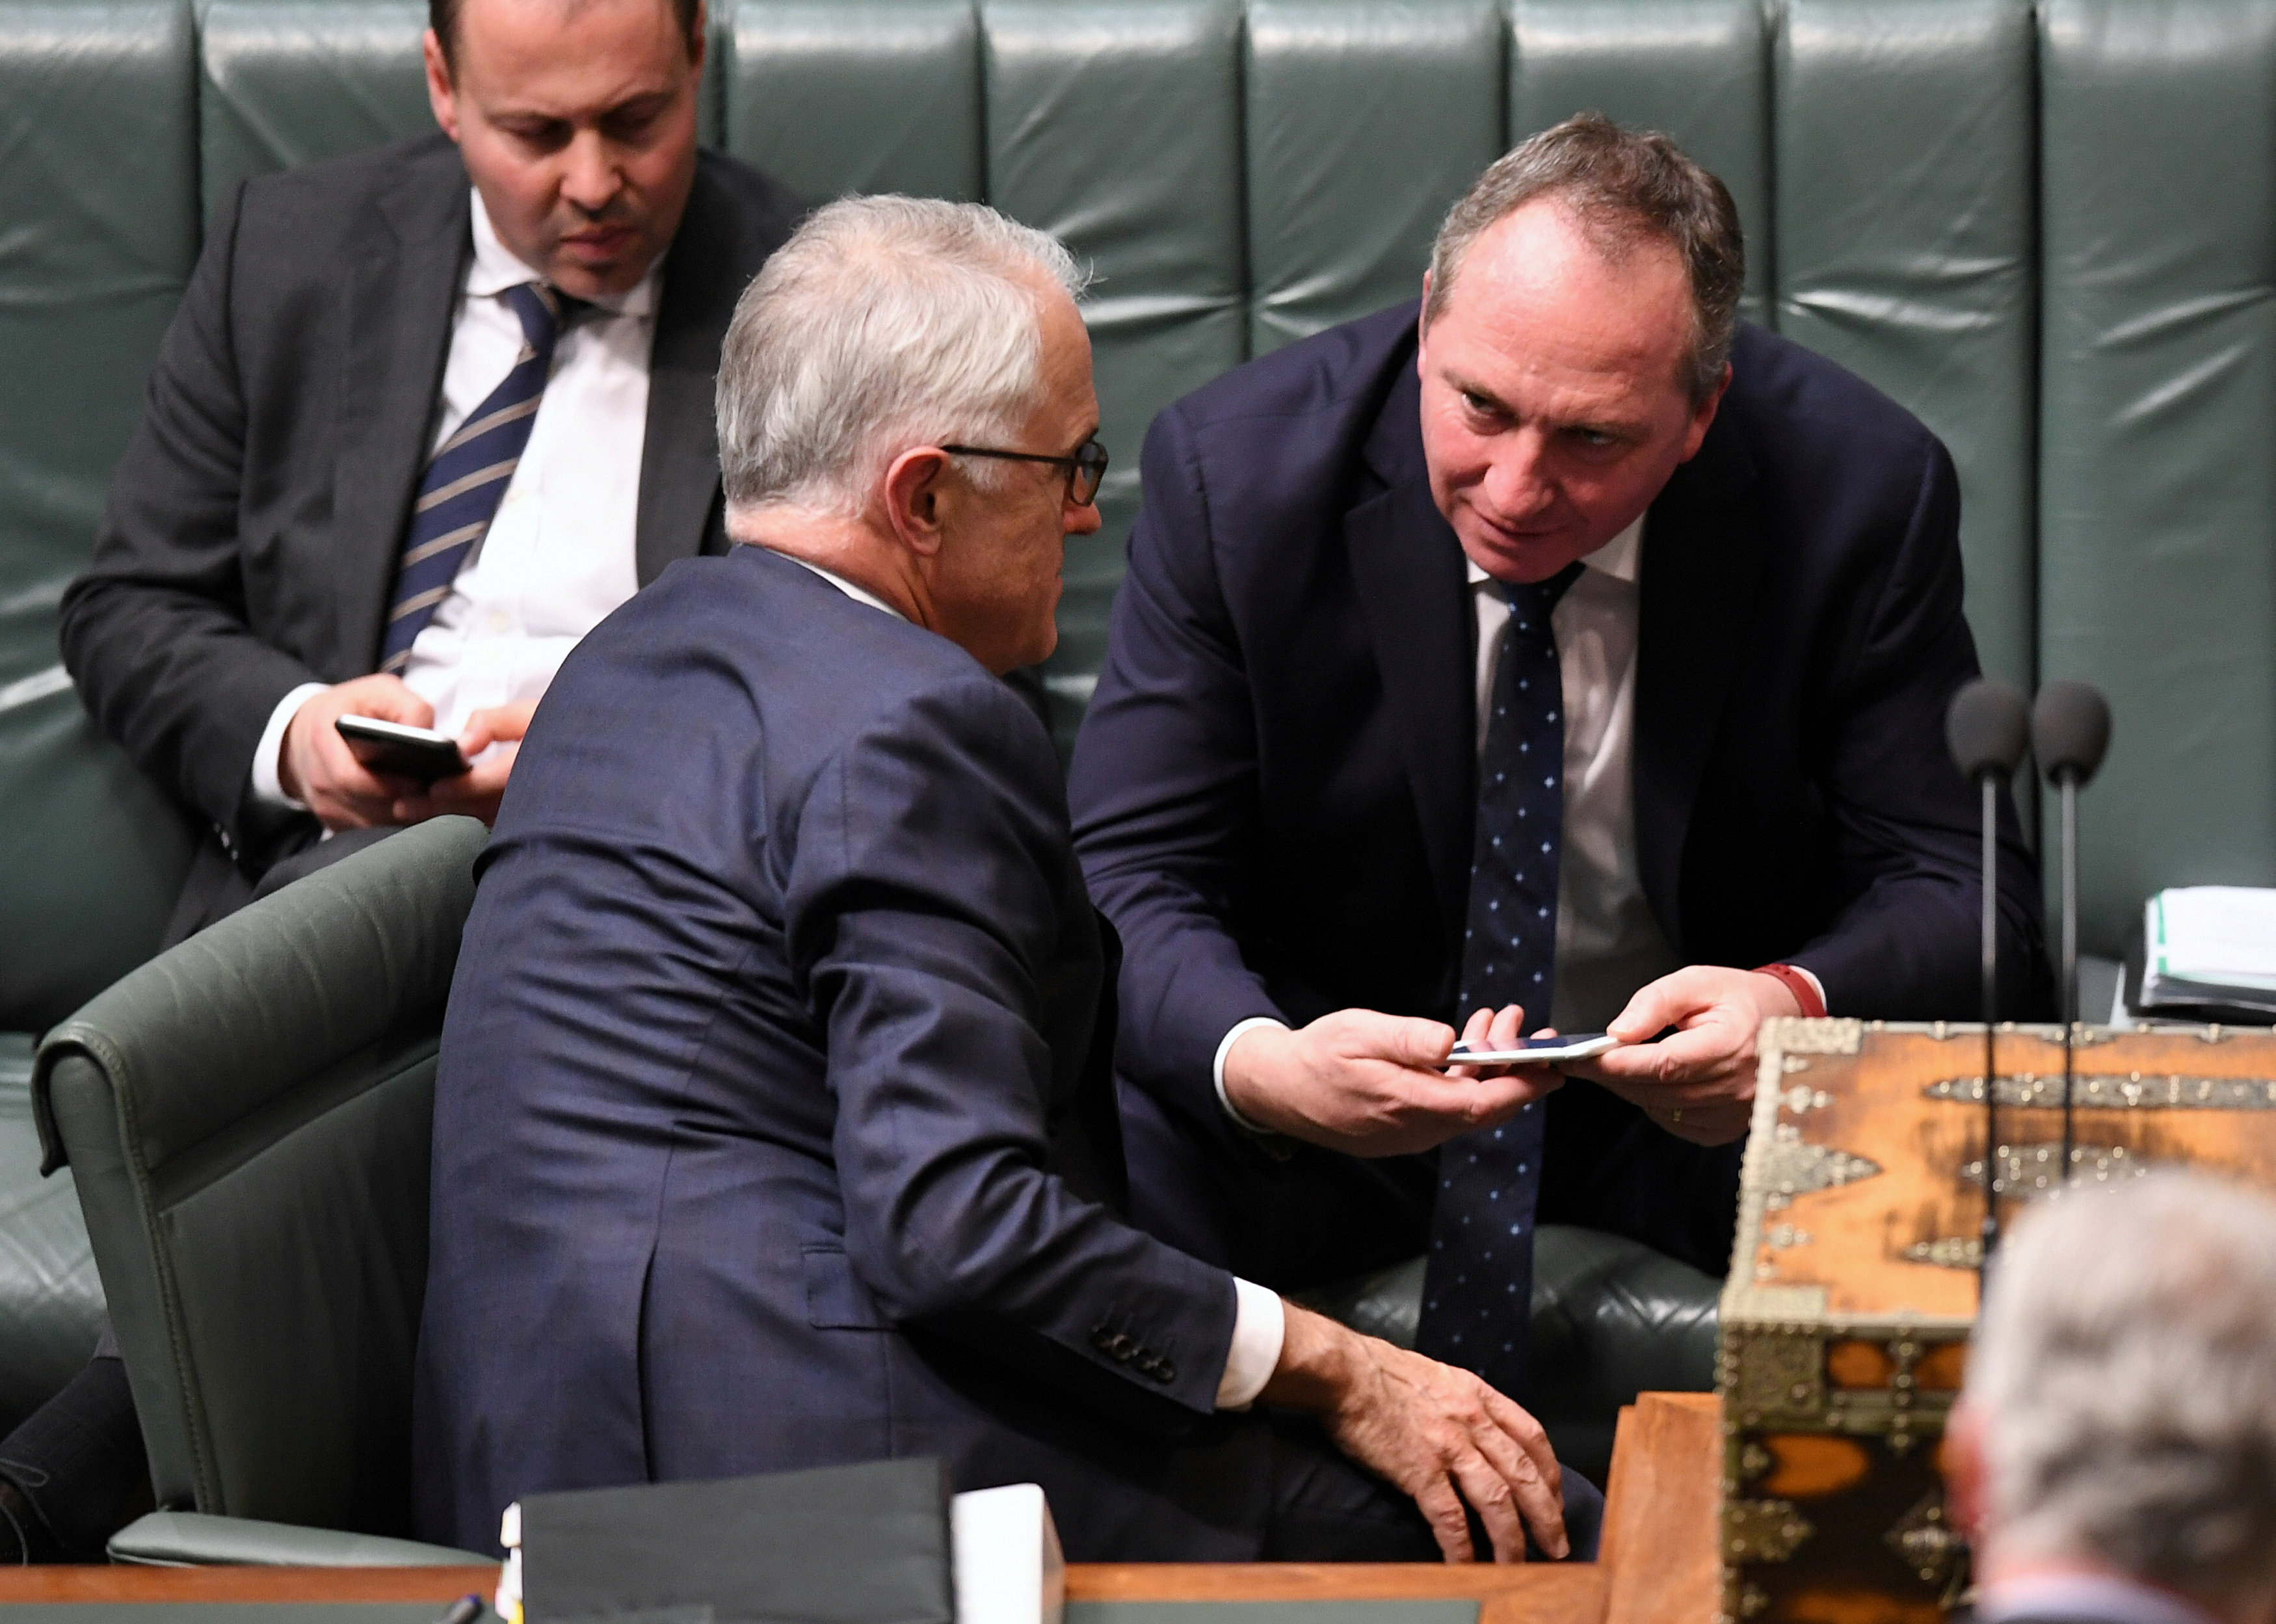 Australian prime minister confident government majority safe, despite questions over his deputy